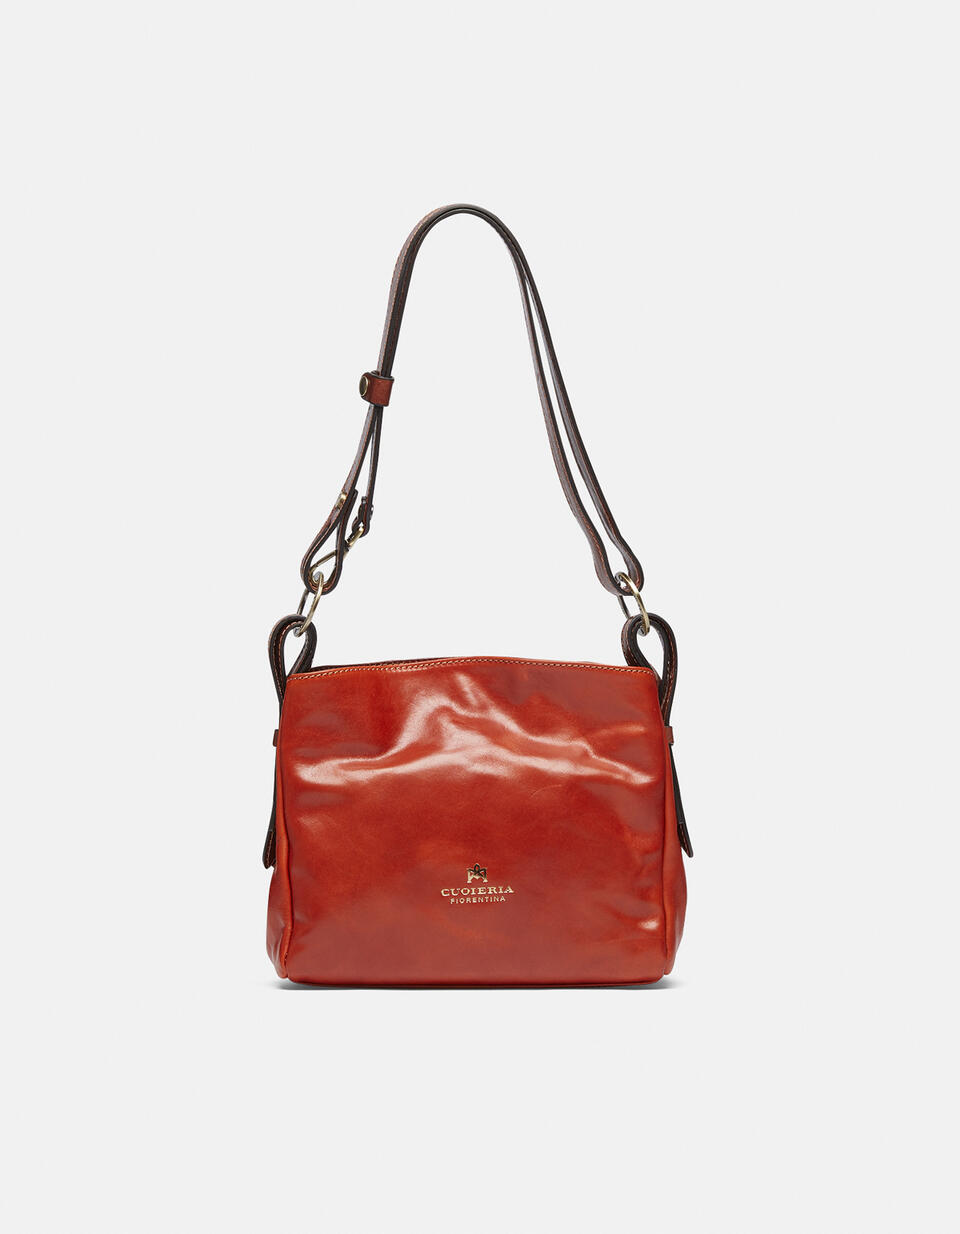 Tokyo leather shoulder bag - Shoulder Bags - WOMEN'S BAGS | bags ARANCIOBICOLORE - Shoulder Bags - WOMEN'S BAGS | bagsCuoieria Fiorentina